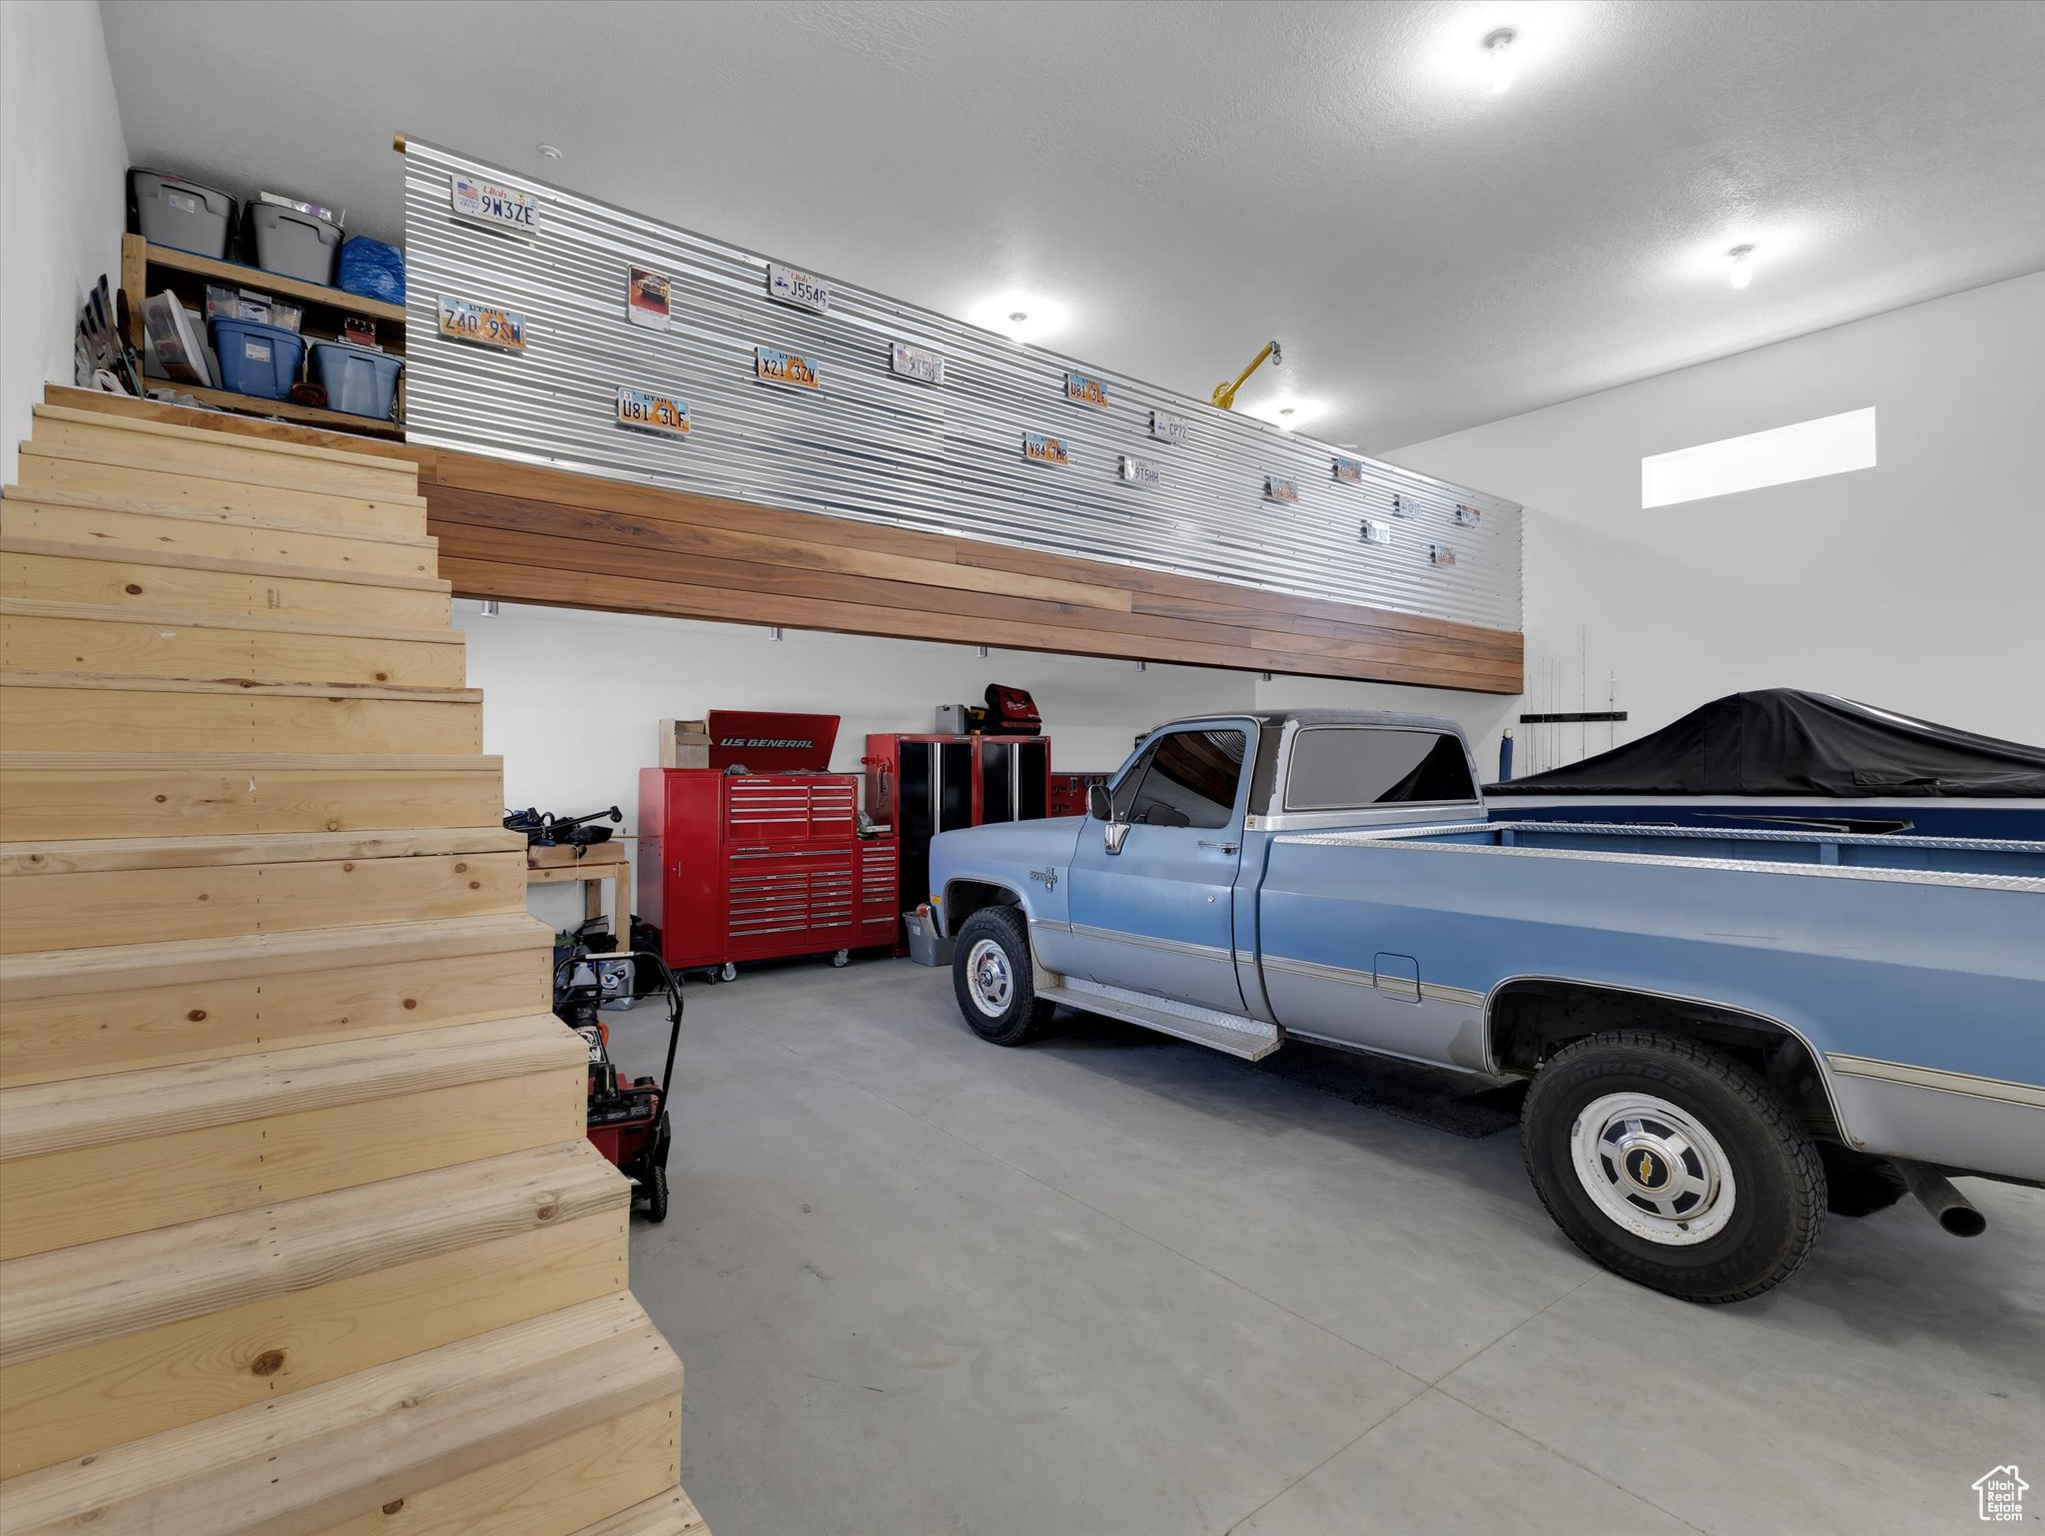 View of loft inside garage